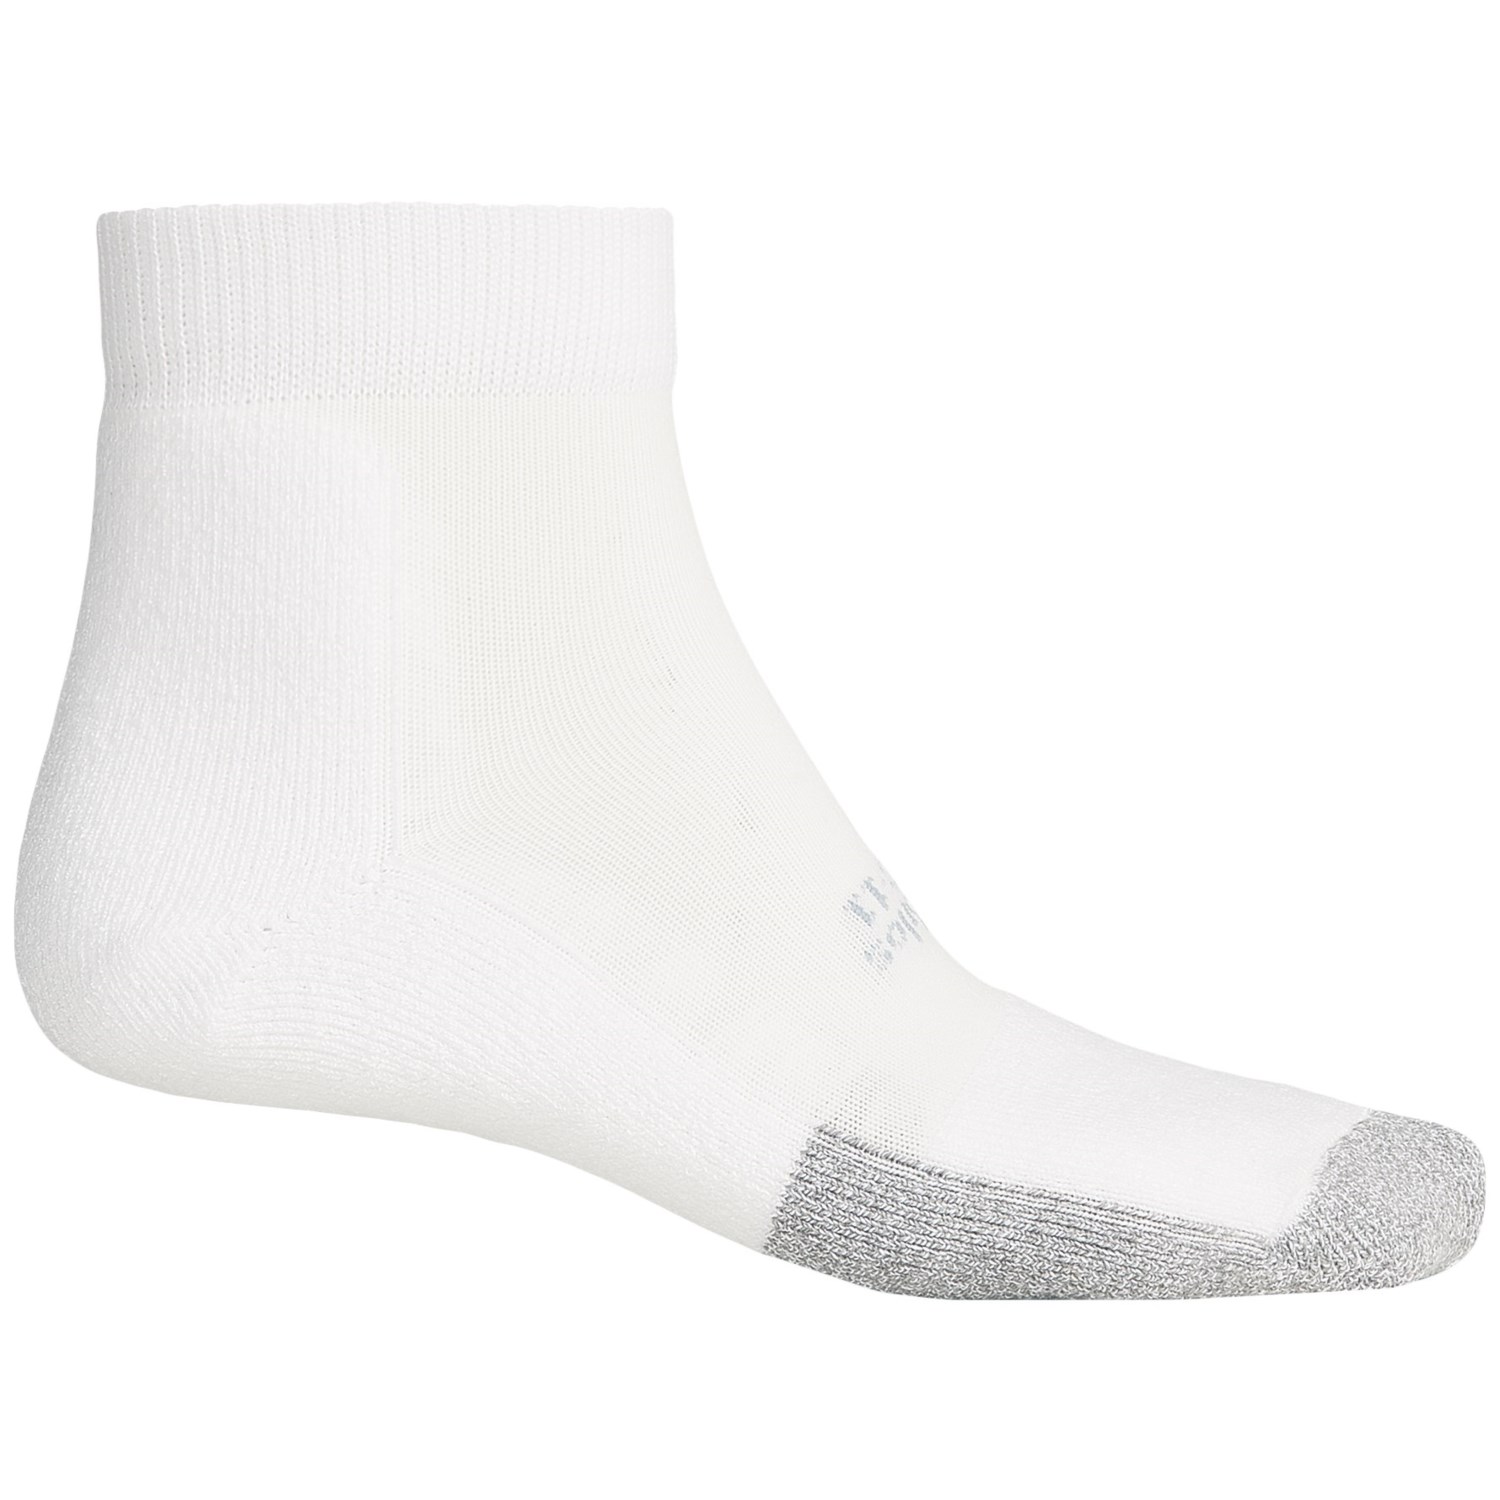 Thorlo Tennis Socks – CoolMax®, Ankle (For Men and Women)